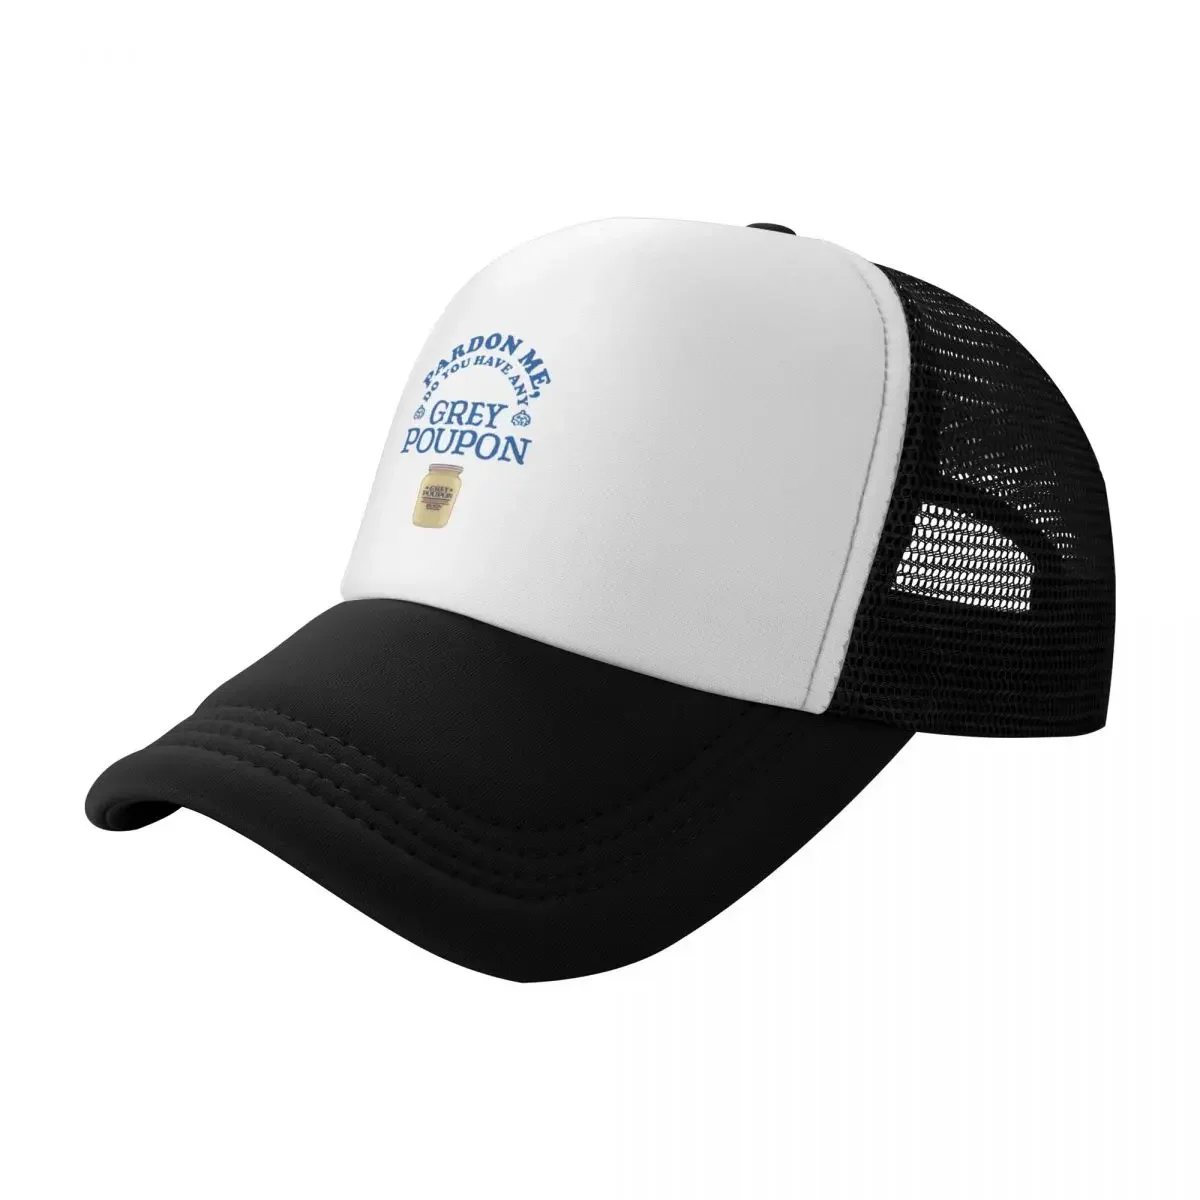 

Pardon Me-(80s Grey Poupon Mustard) Baseball Cap Streetwear black Mountaineering Snap Back Hat Caps Women Men's